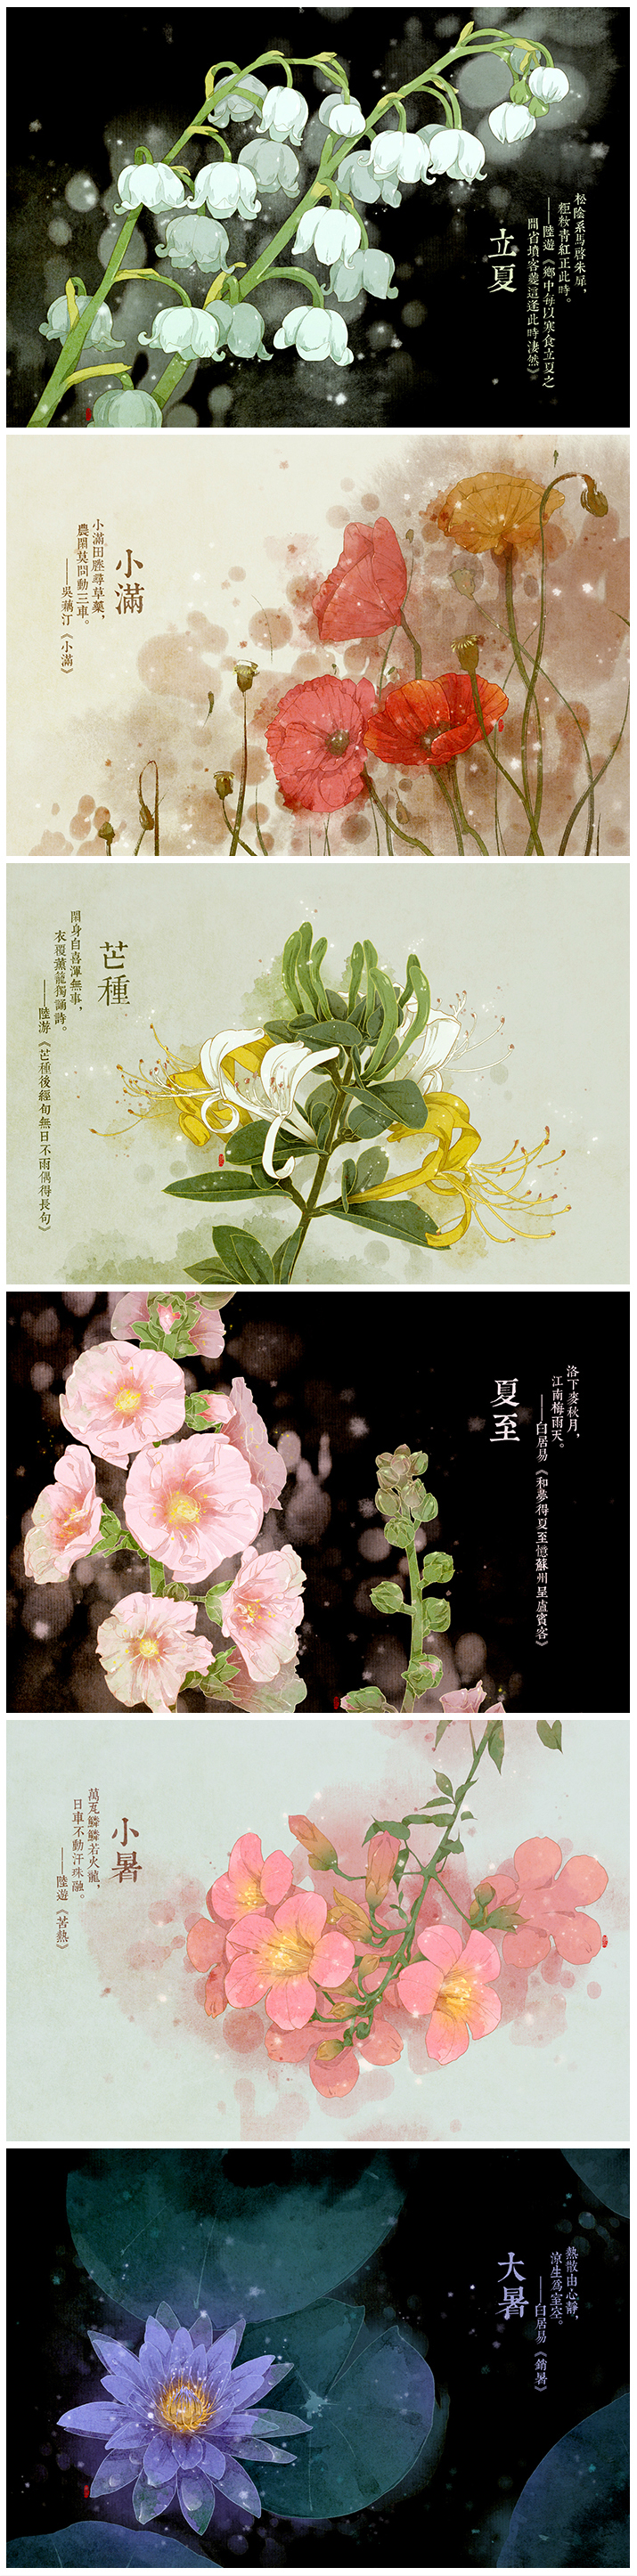 The 24 Solar terms Flowers 二十四节气